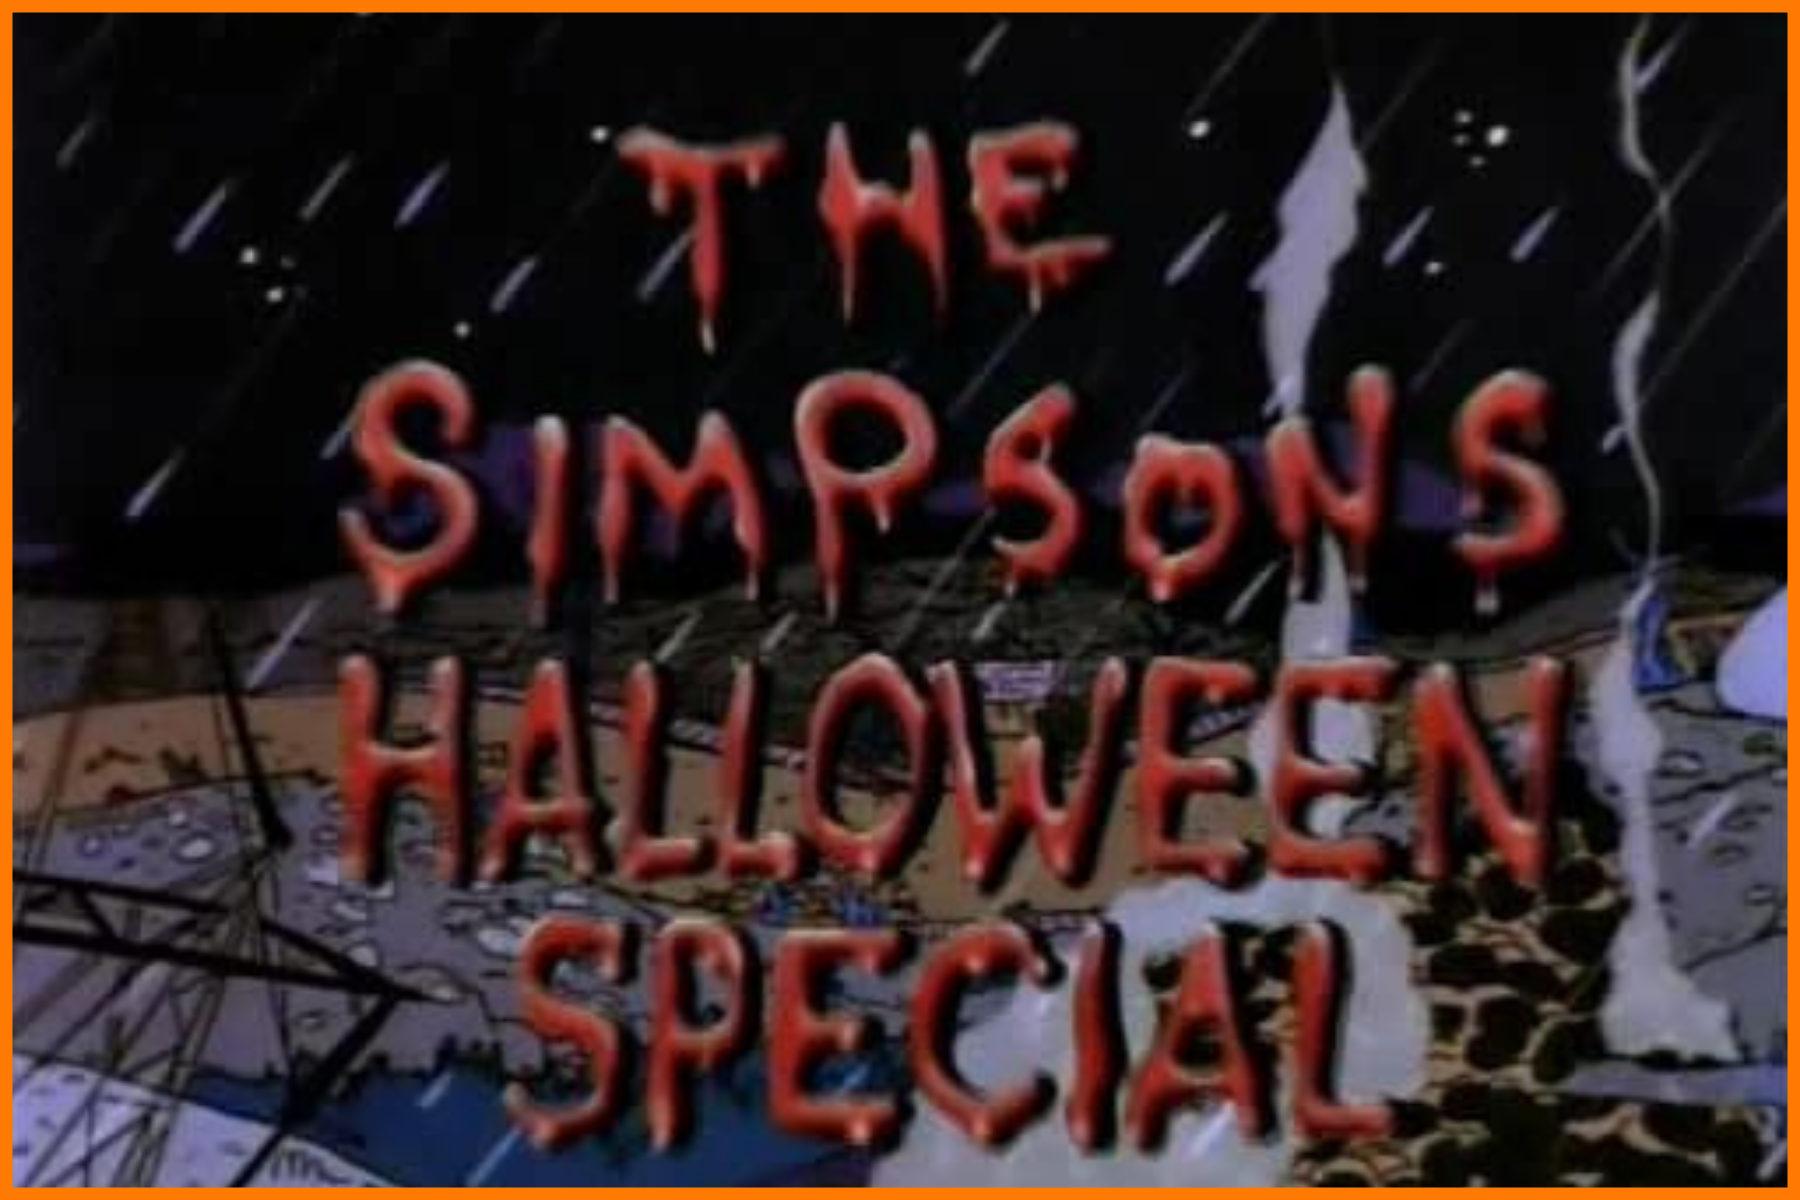 Simpsons Quiz: The Simpsons' Halloween Special (1990)